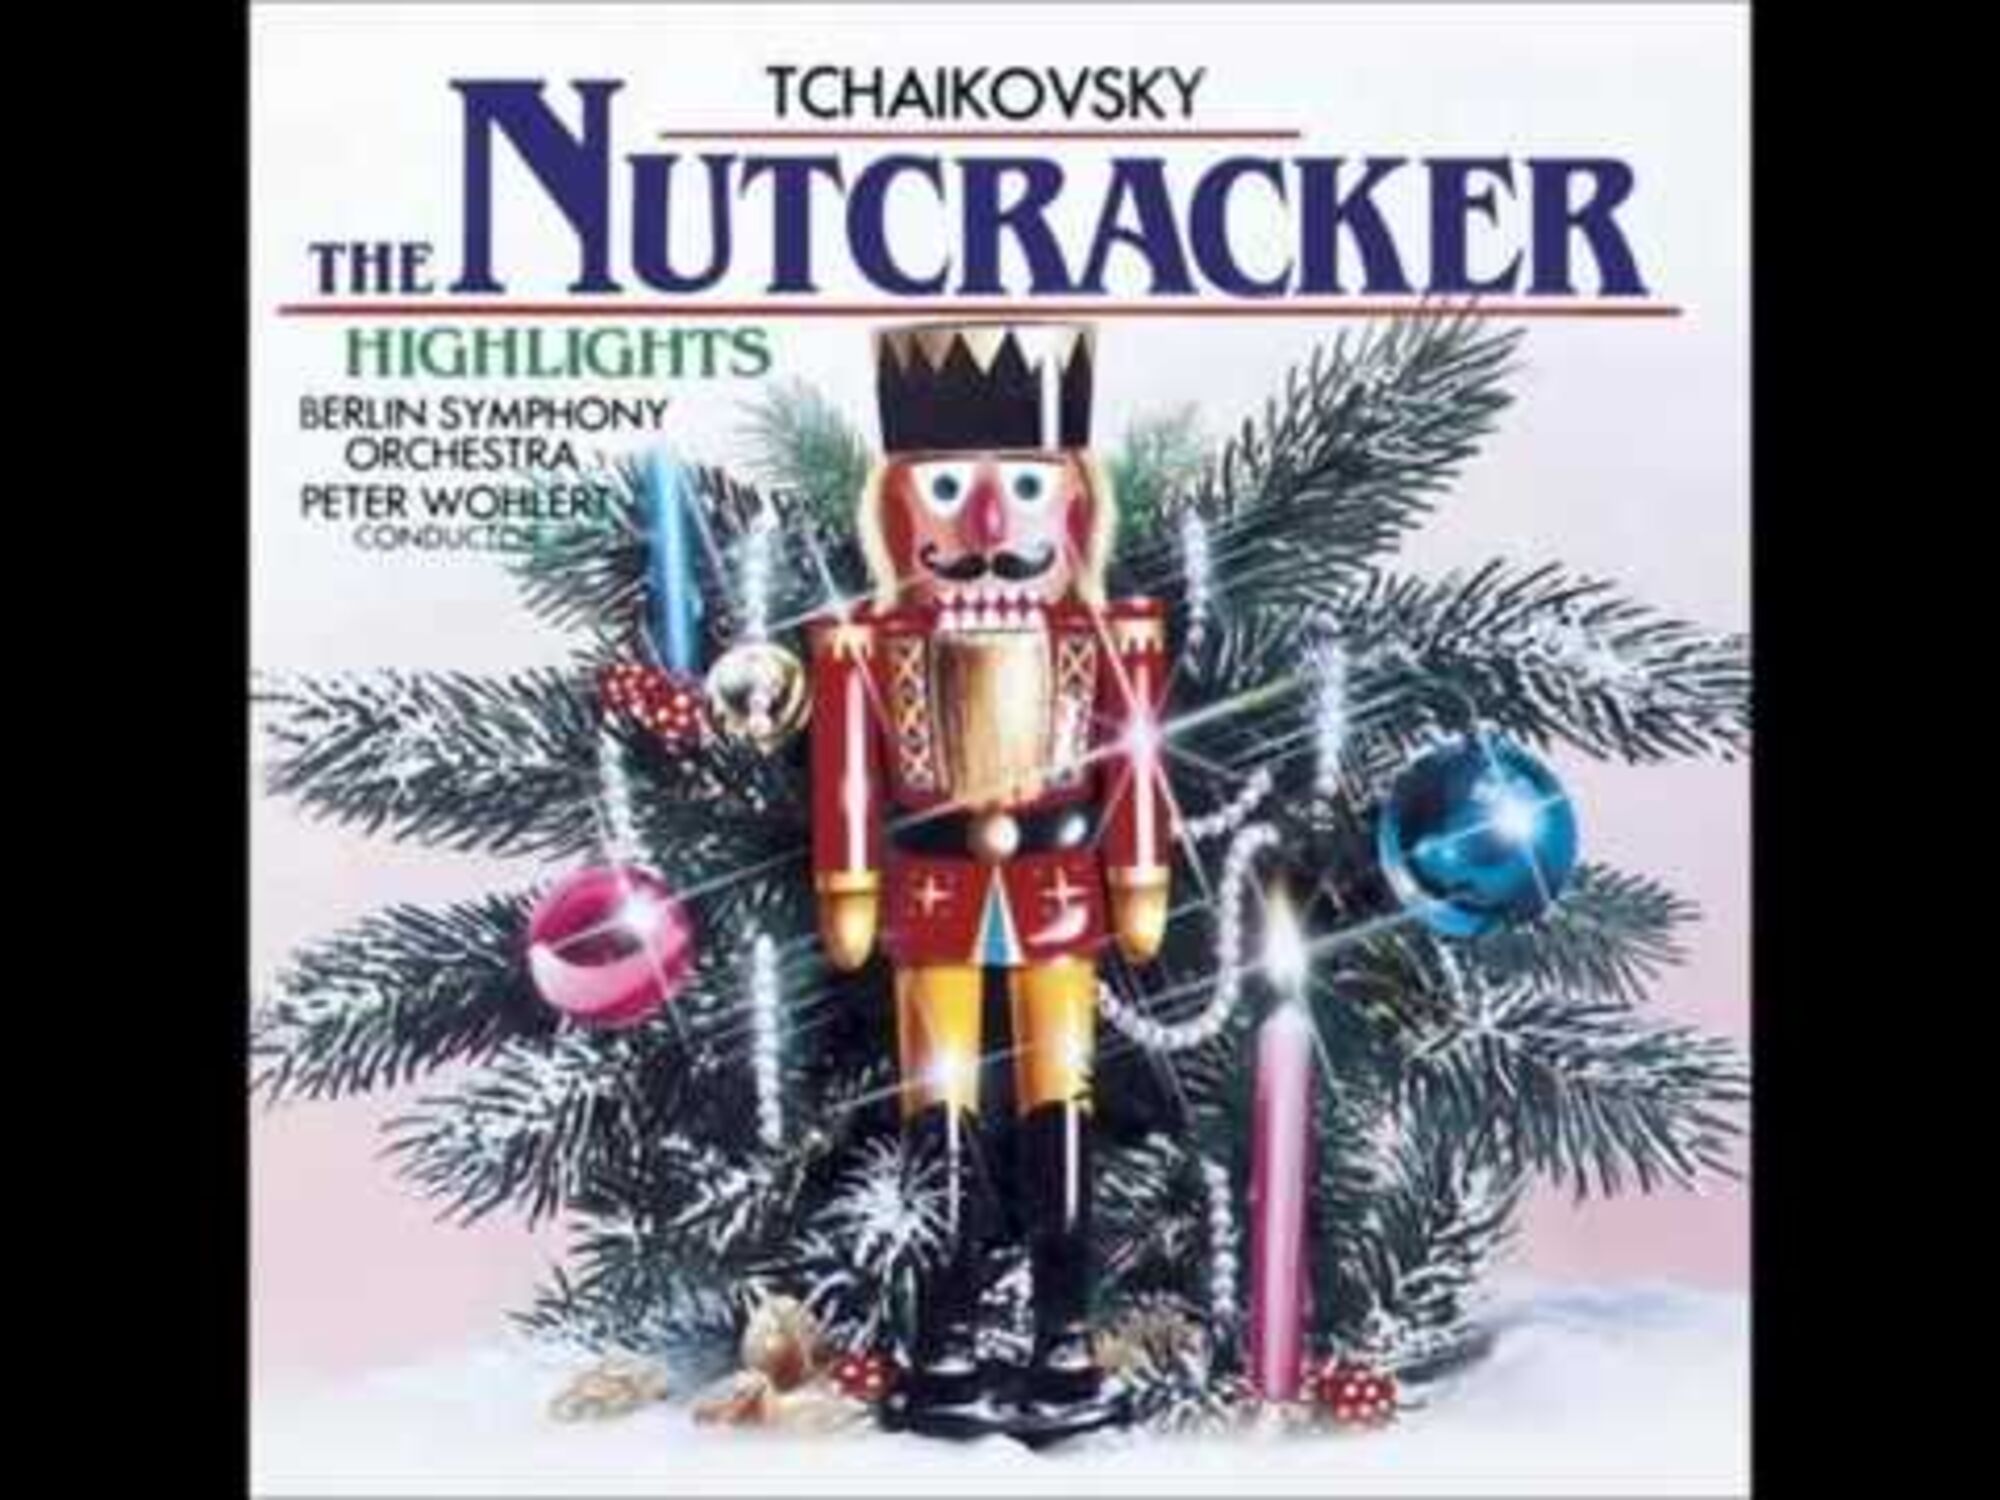 The Nutcracker Suite Full Album: Tchaikovsky